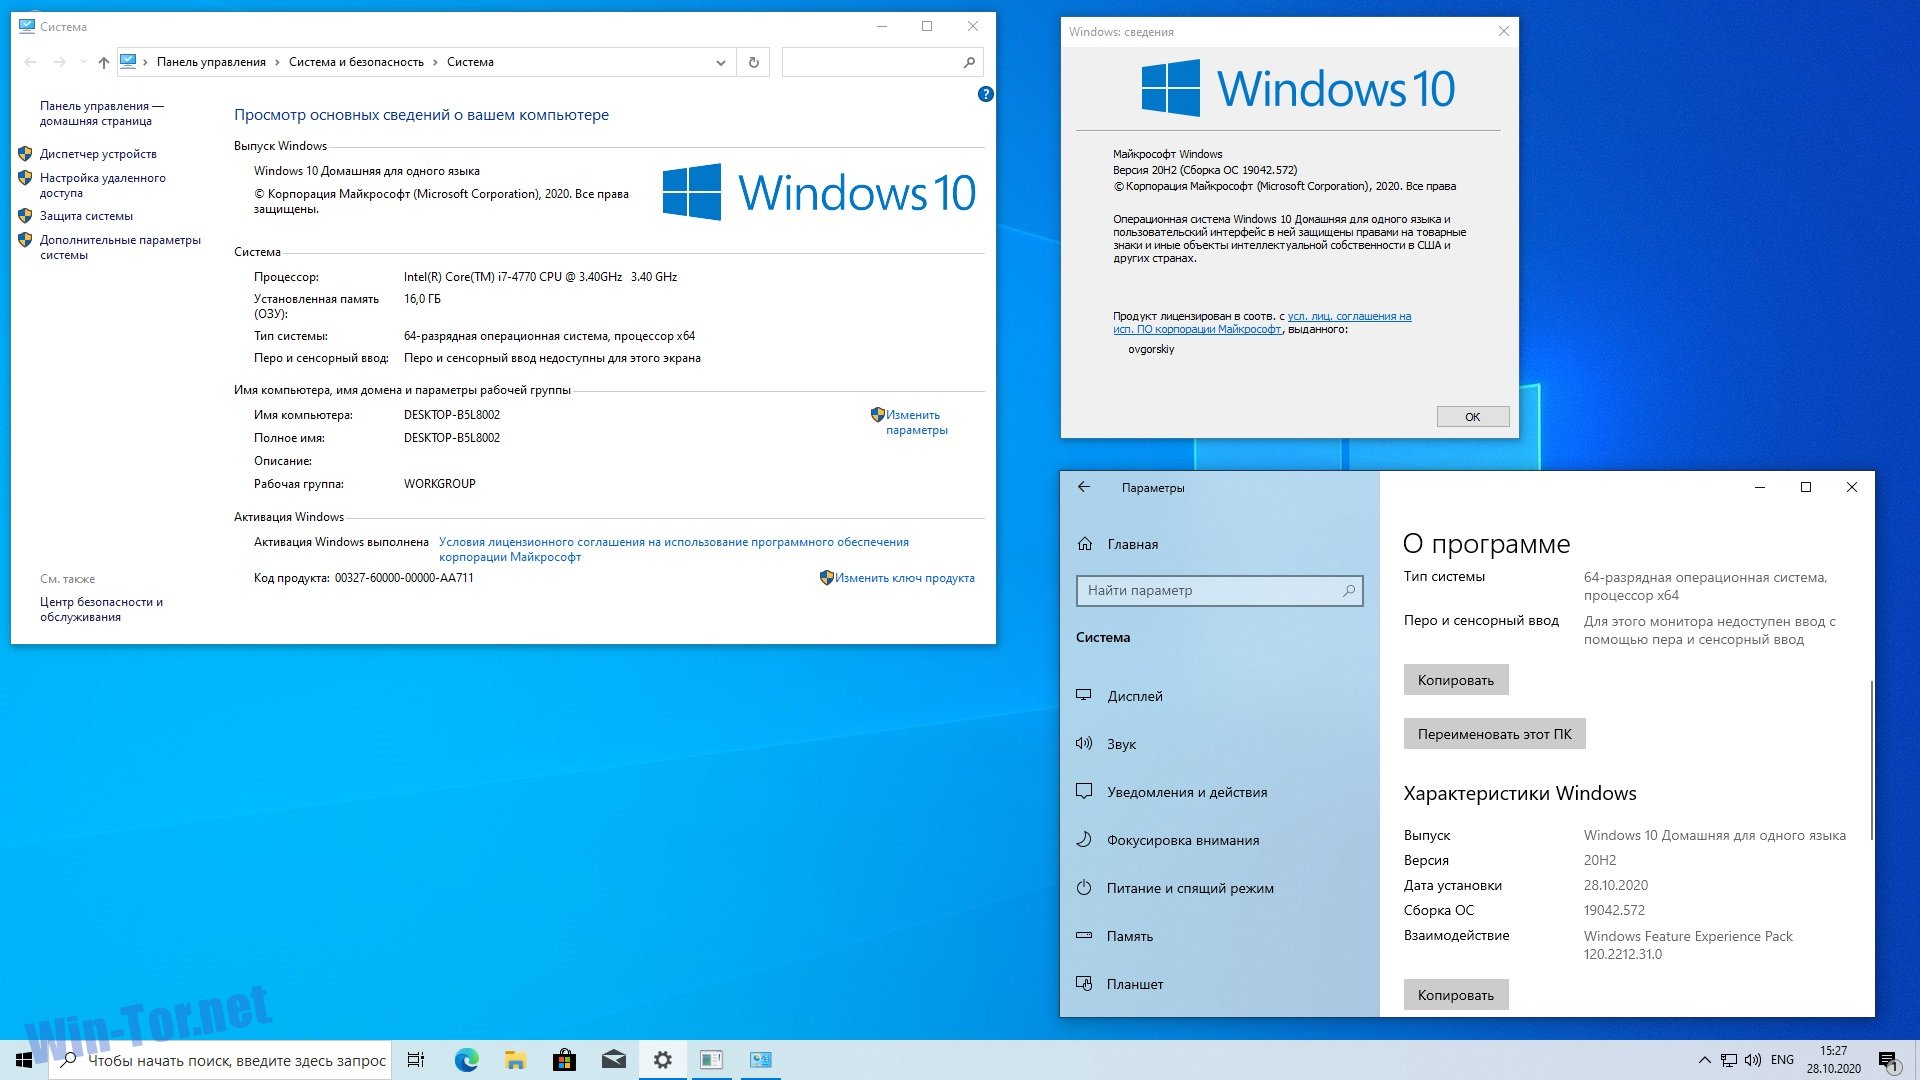 Обновление виндовс 10. Windows 10 professional VL x86-x64 20h2 ru by OVGORSKIY октябрь 2020. Windows 10 OVGORSKIY Edition. Операционная система Windows 10 build 1909.